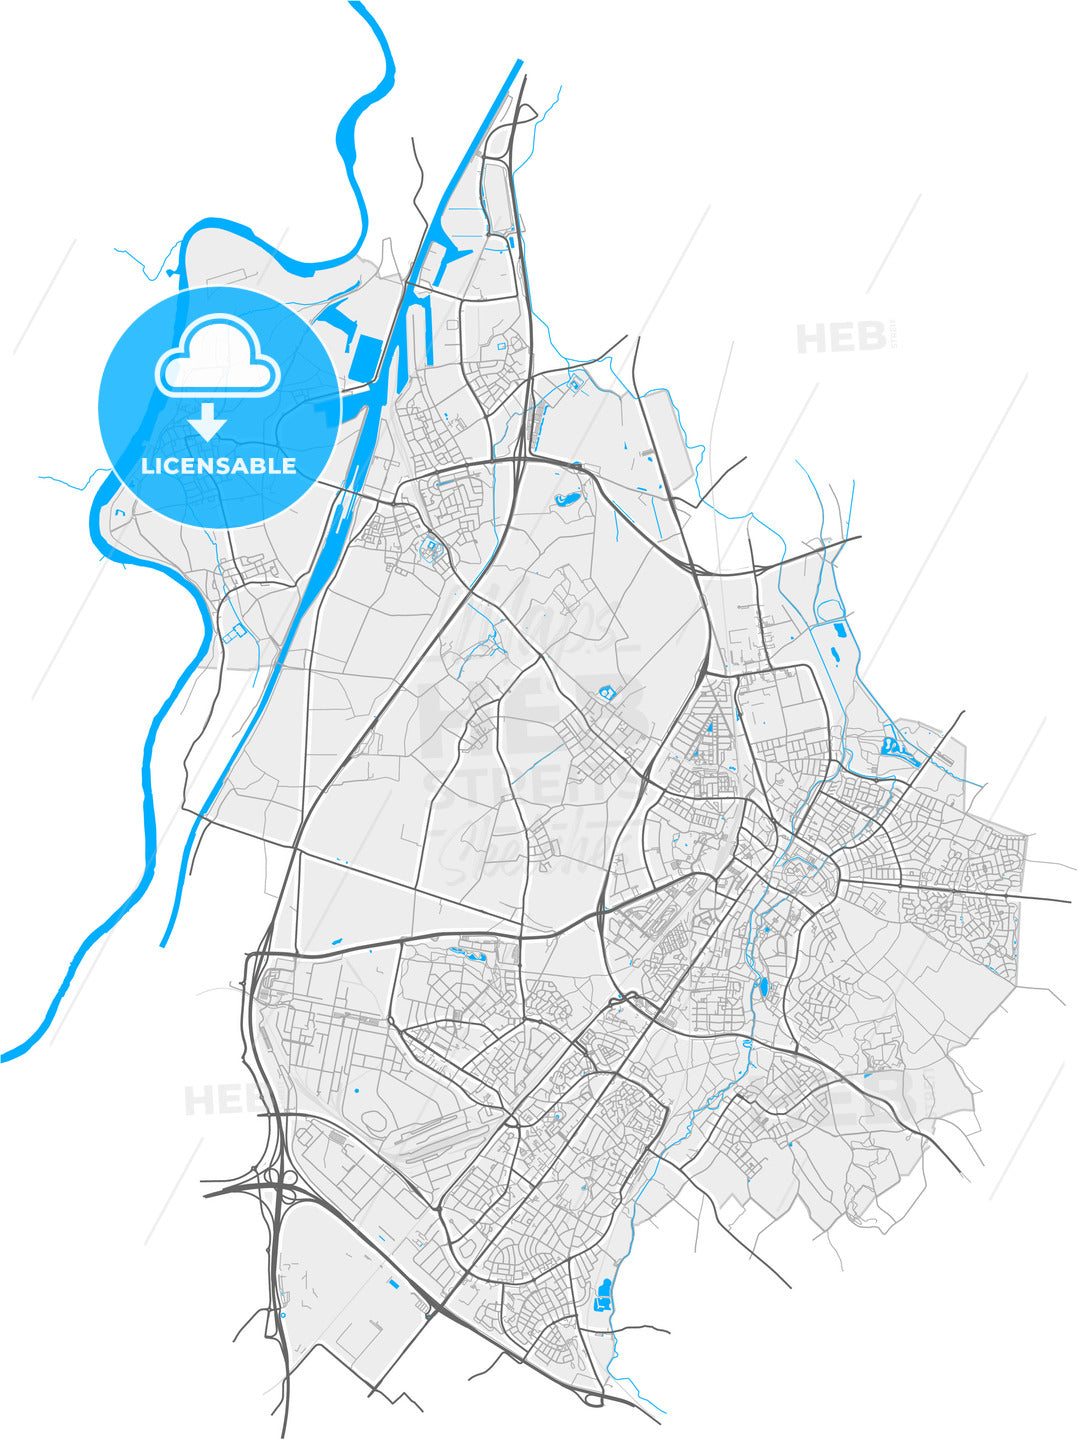 Sittard-Geleen, Limburg, Netherlands, high quality vector map